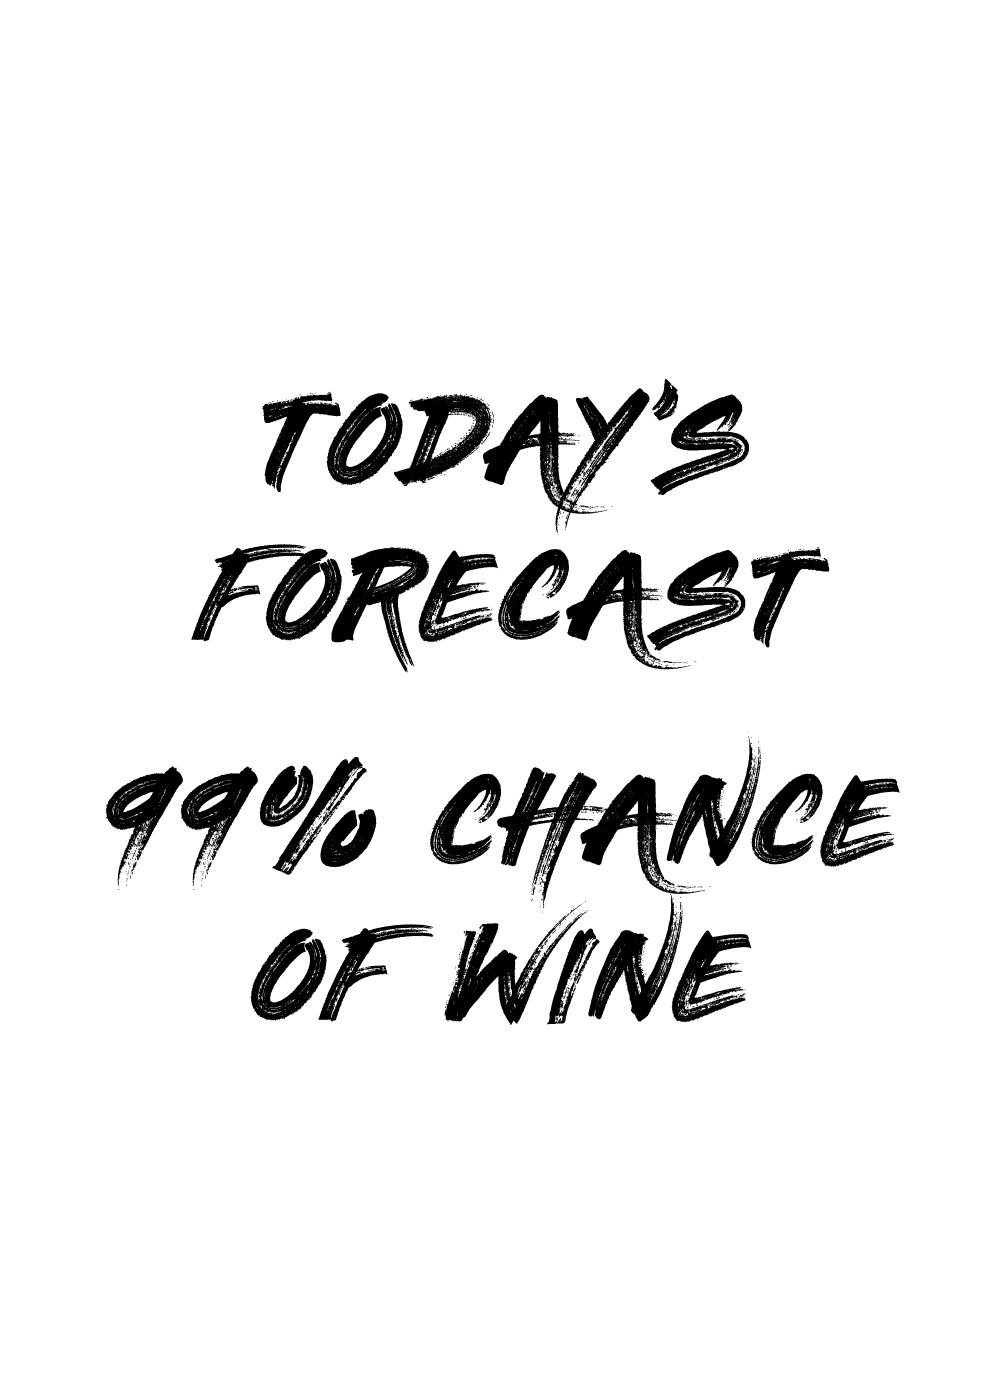 99% chance of wine - Vin plakat